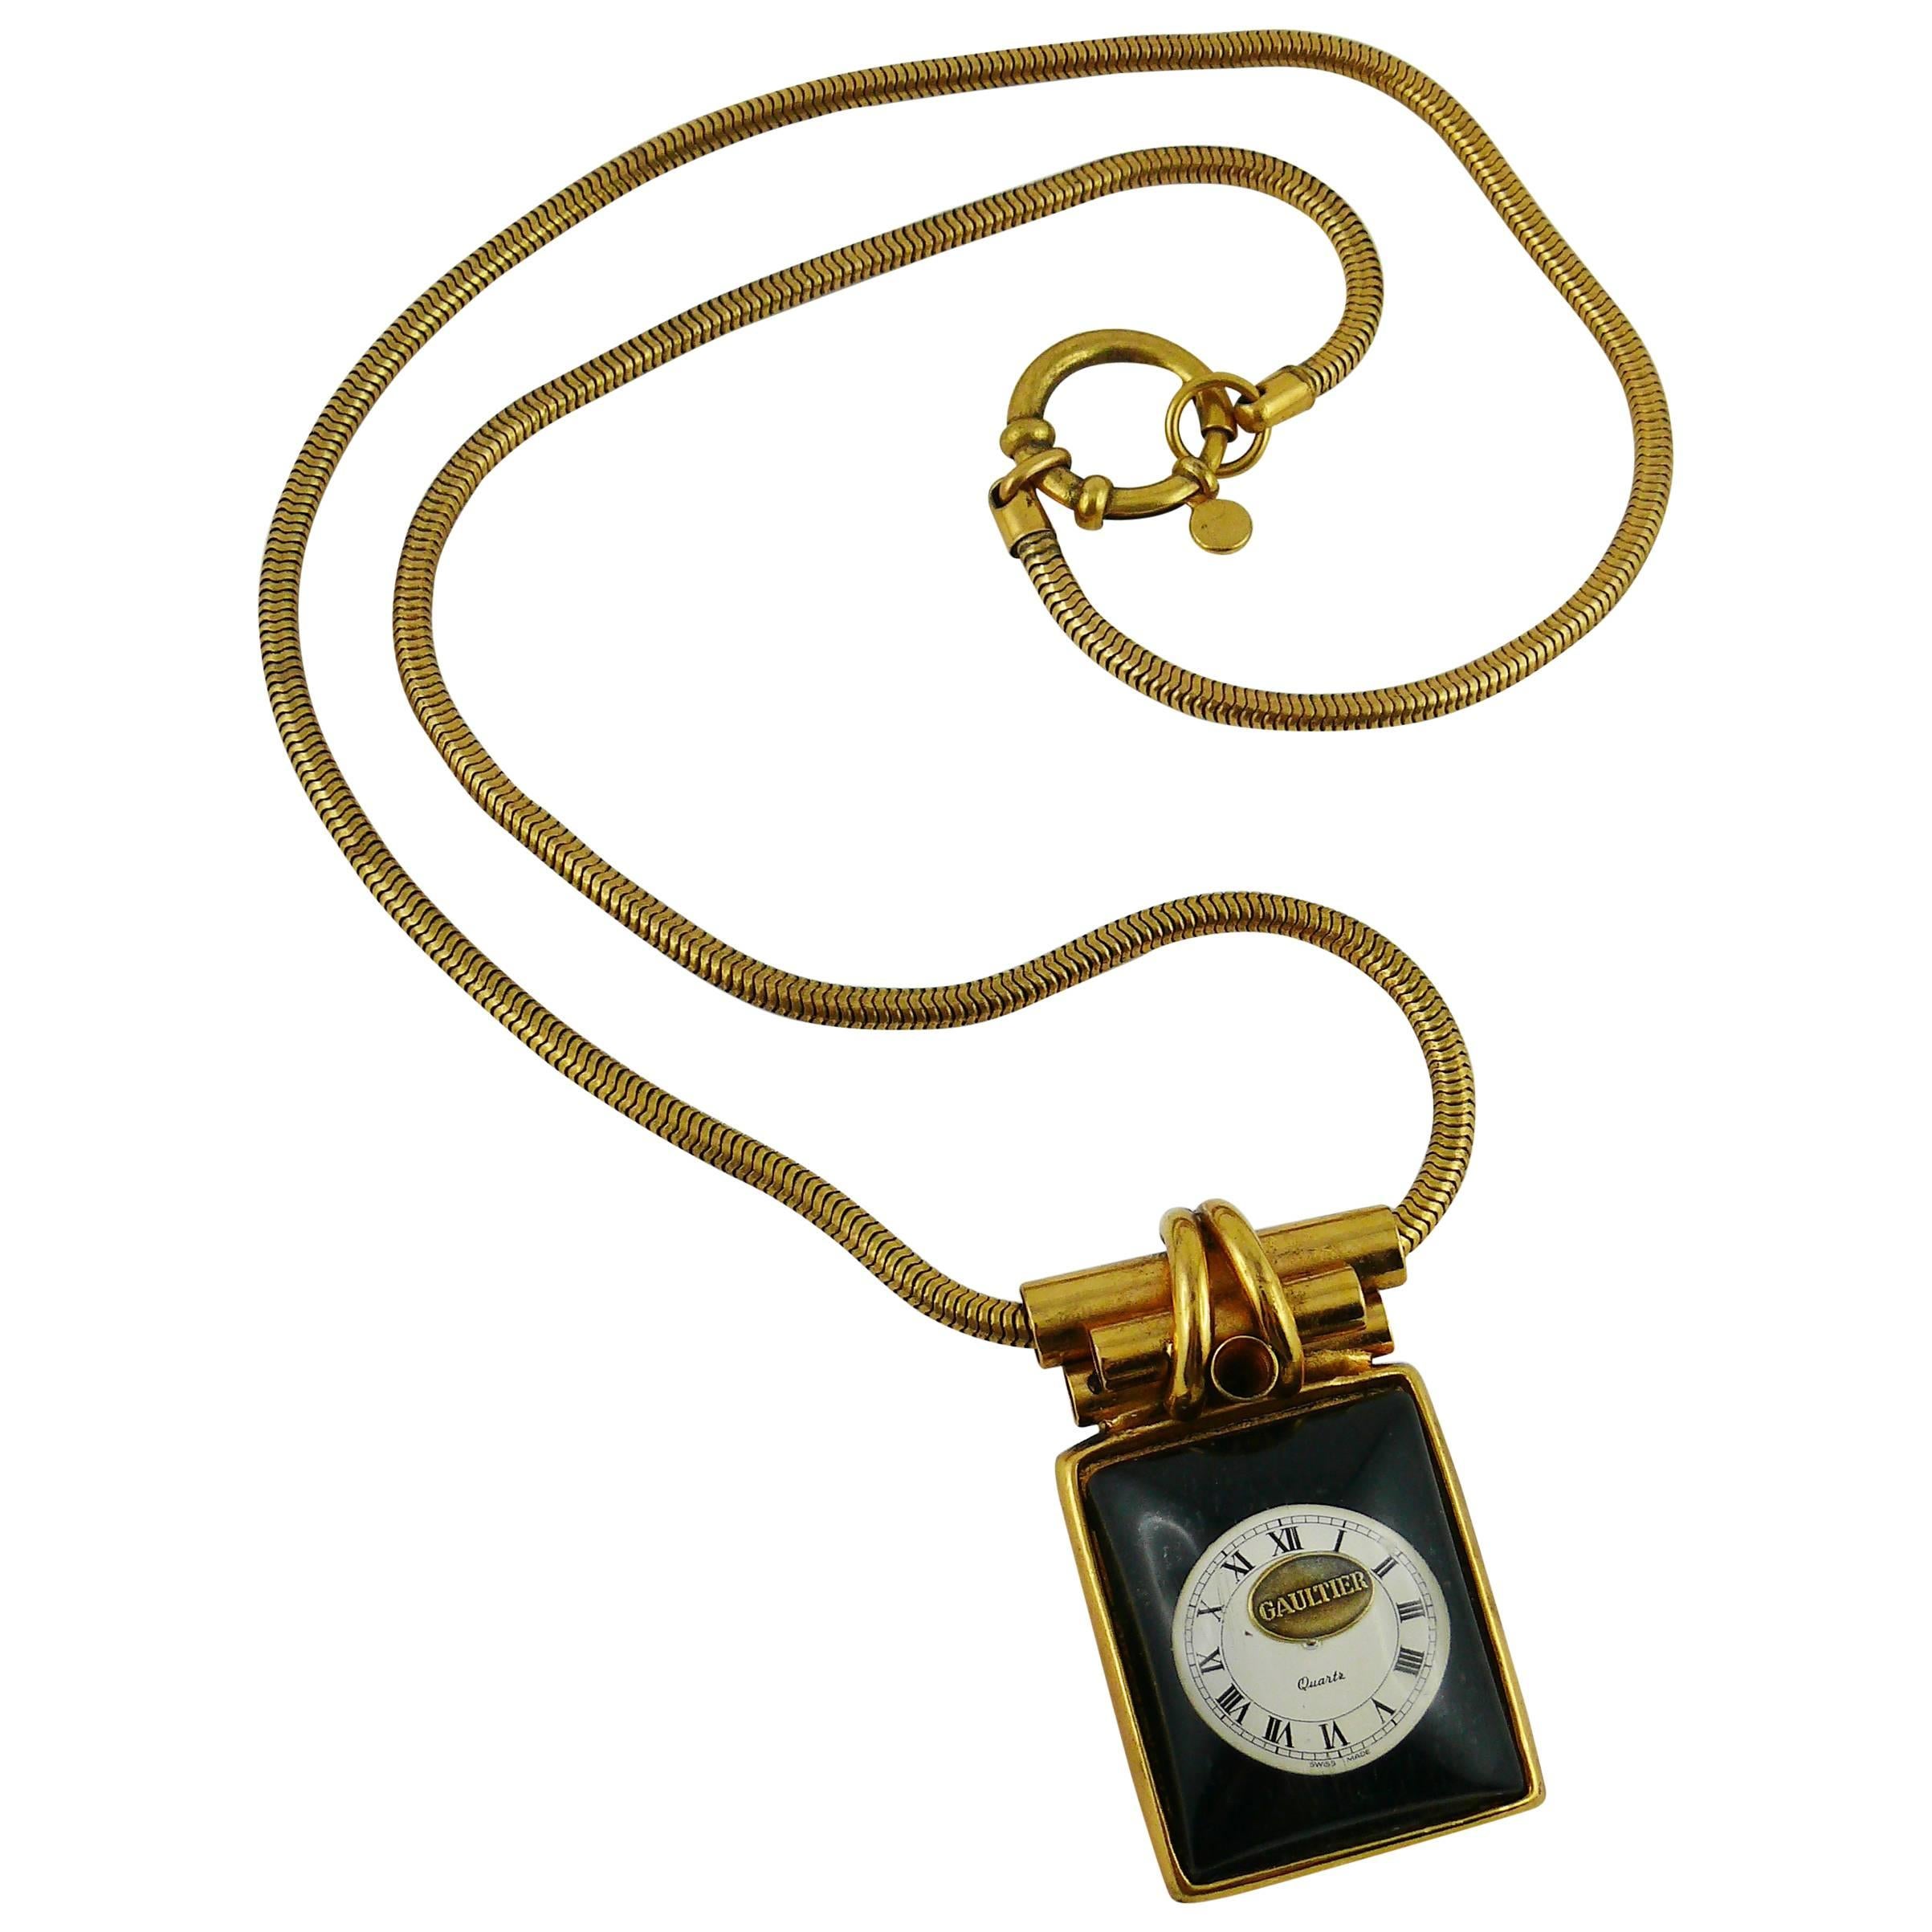 Jean Paul Gaultier Vintage Rare Collectable Steampunk Watch Pendant Necklace